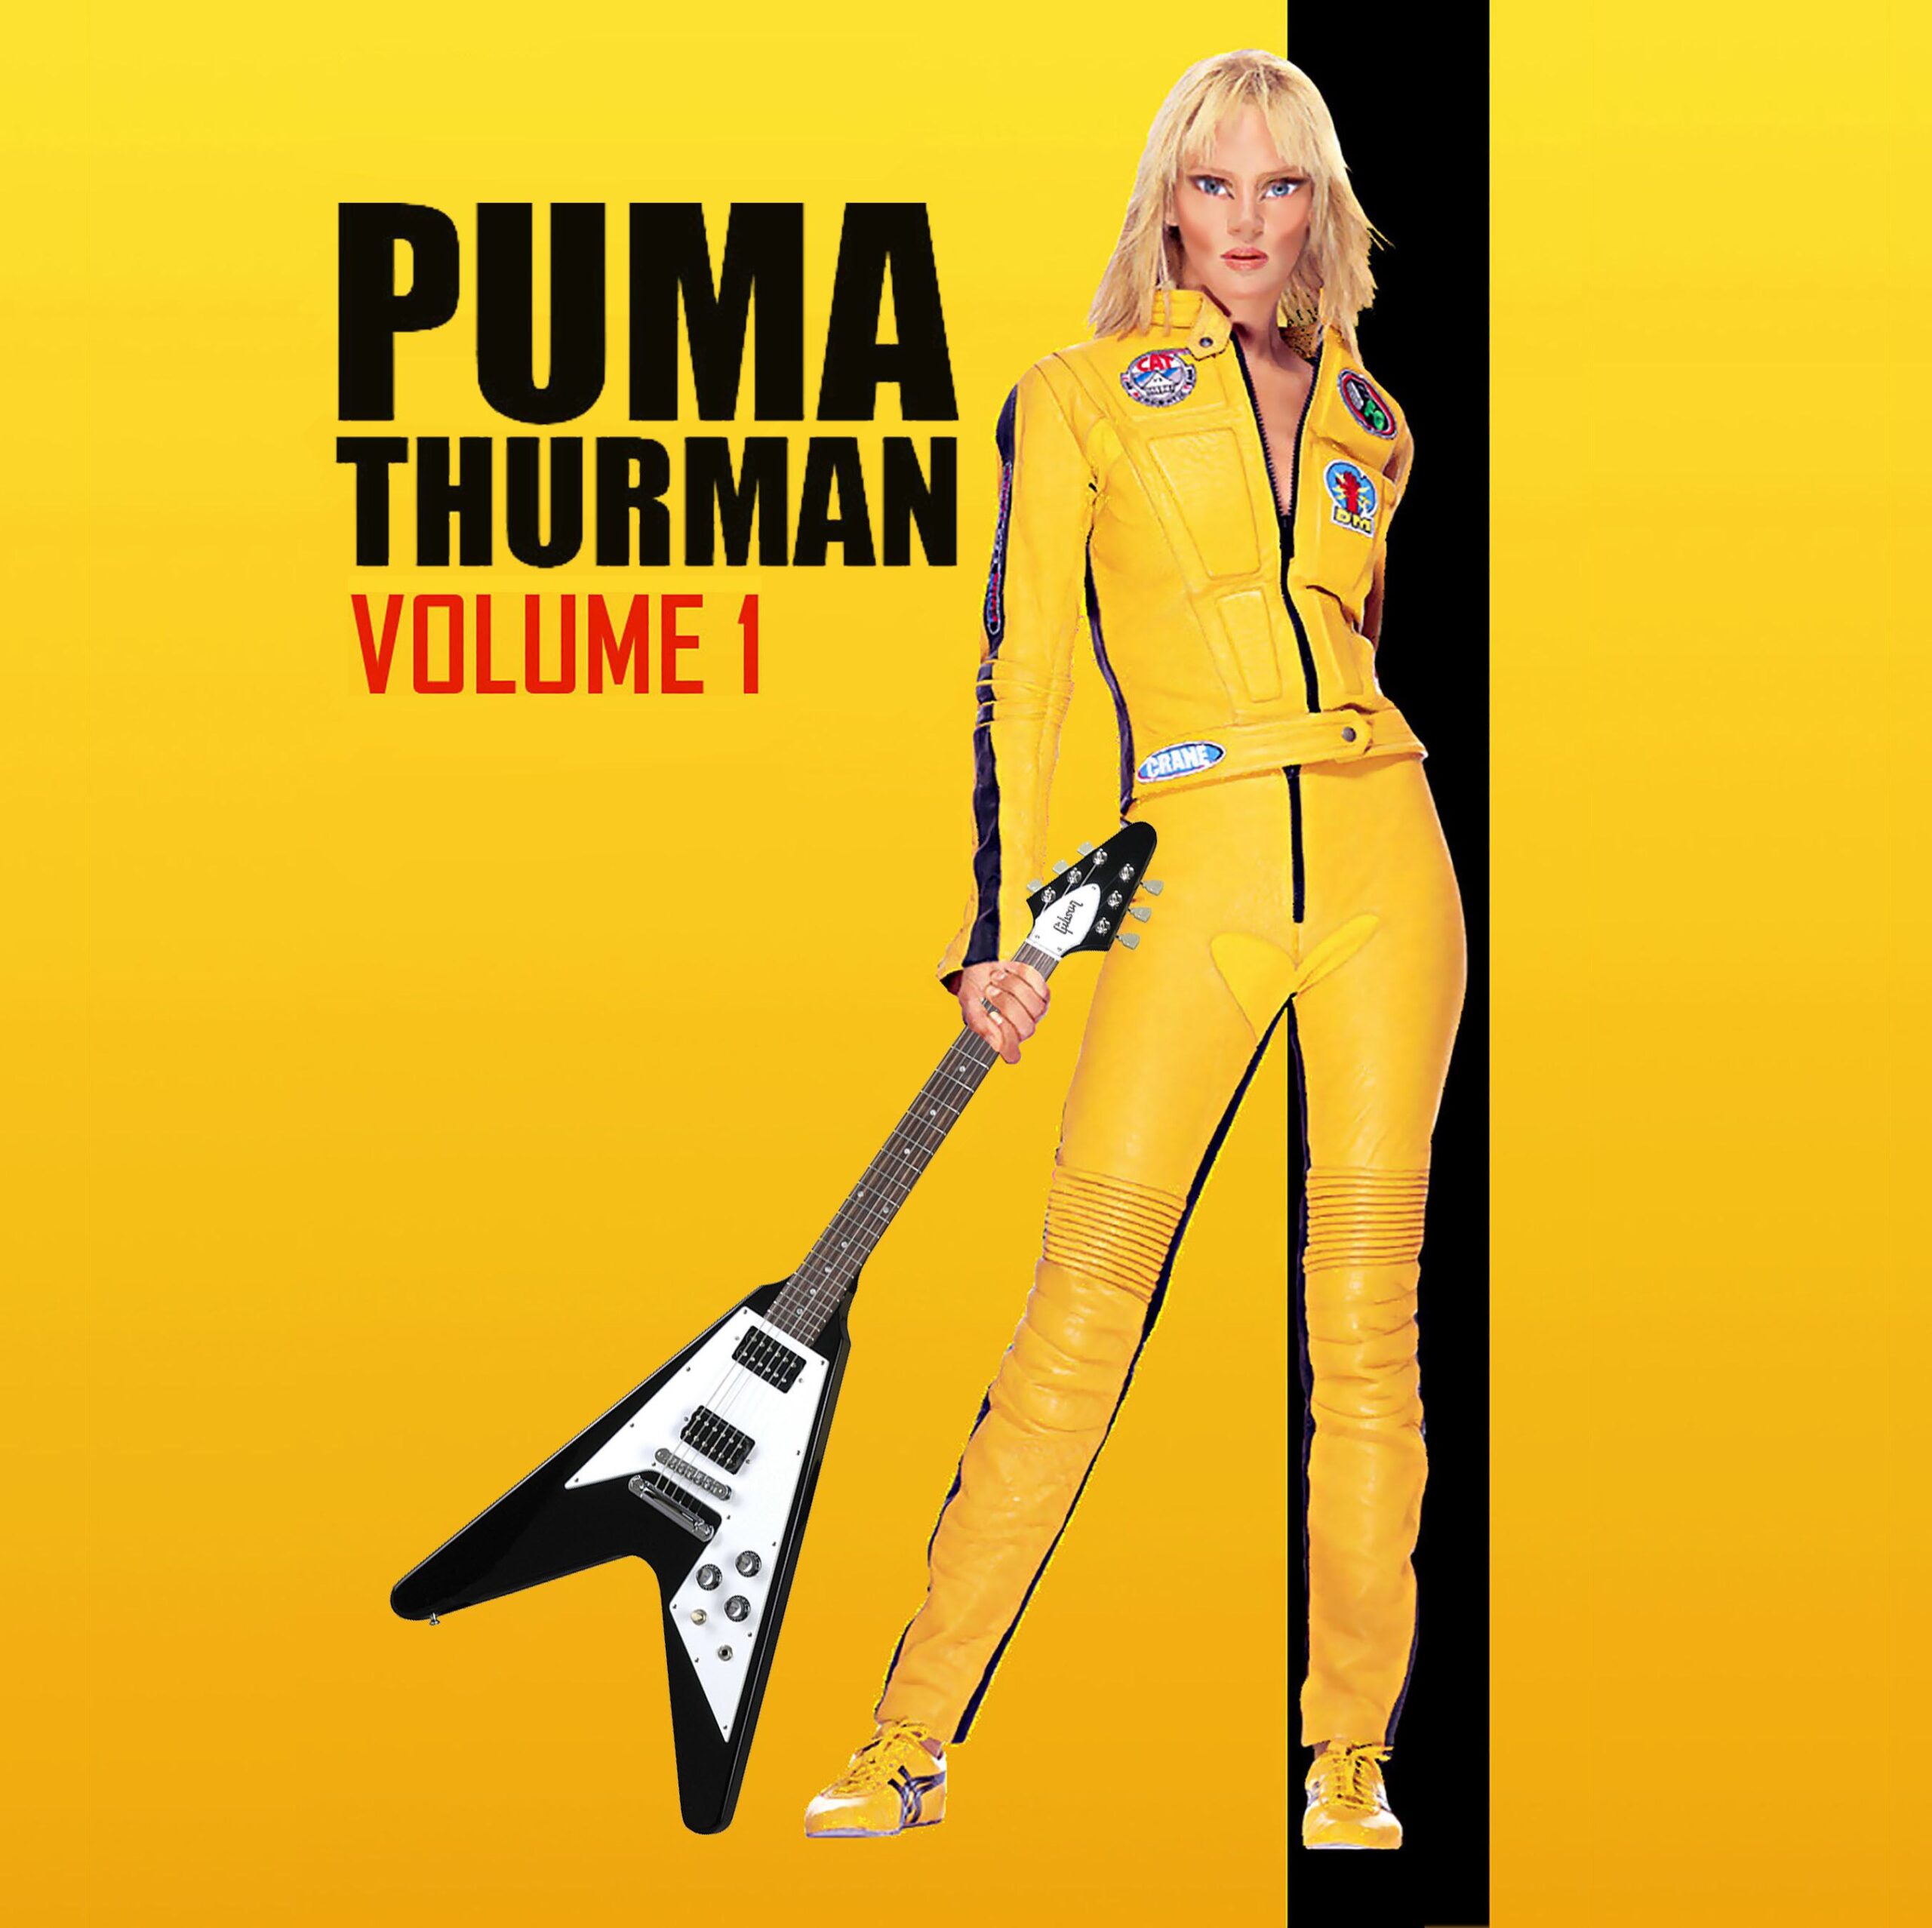 Puma Thurman Volume 1 Album Art